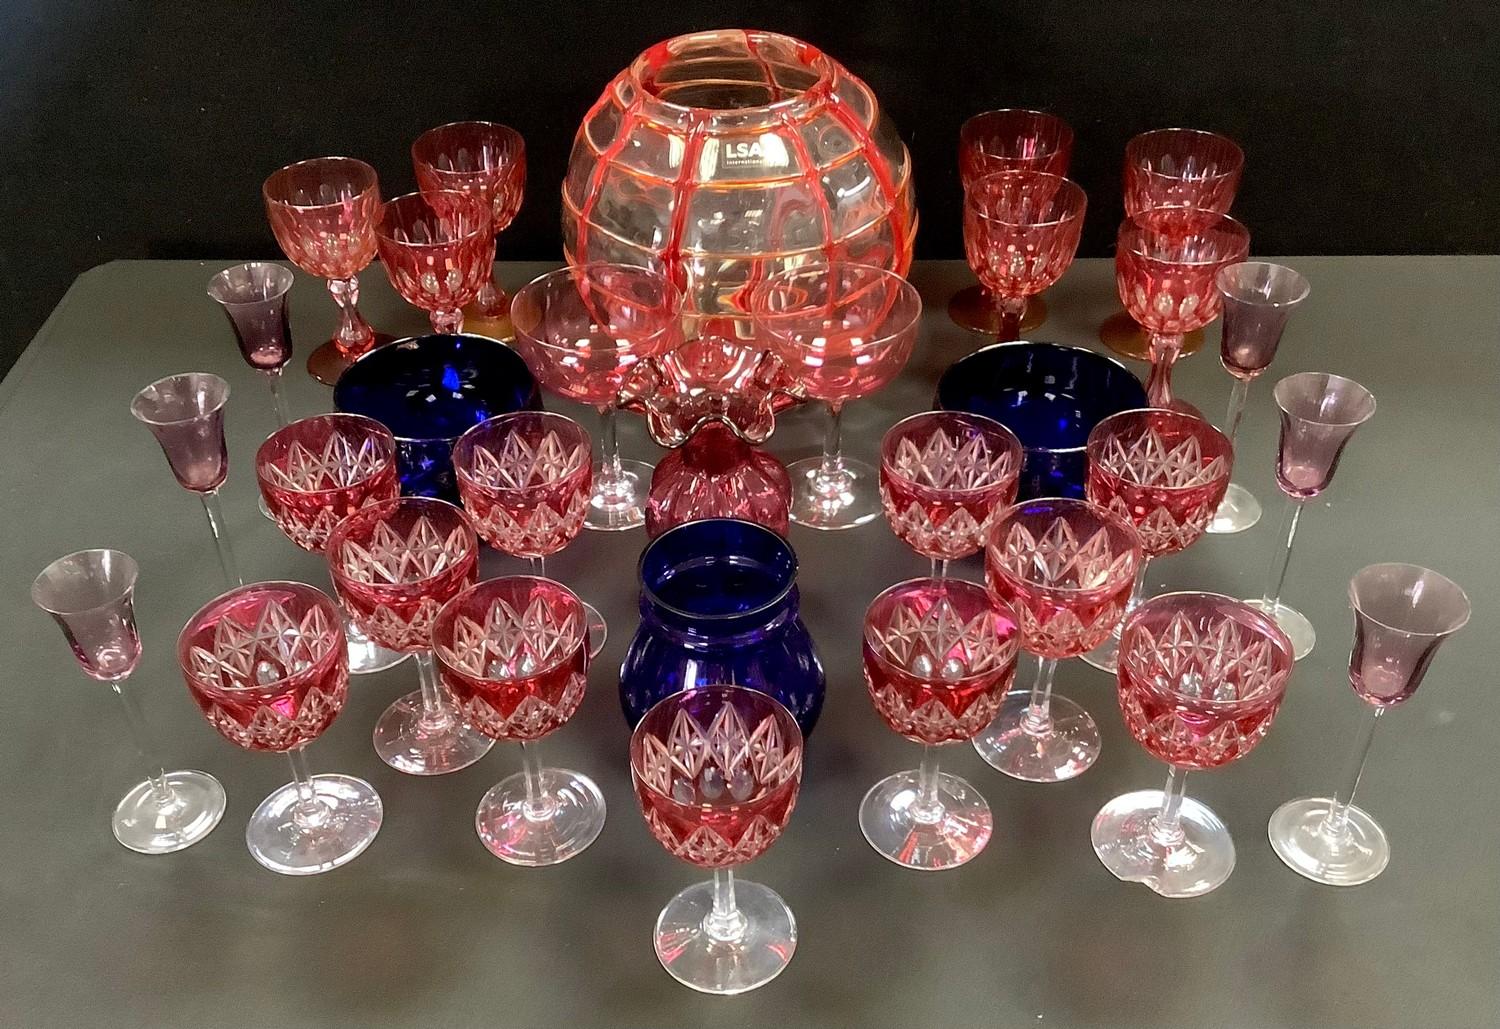 Ruby flash wine glasses, Bristol Blue vases, LSA globular vase, others.